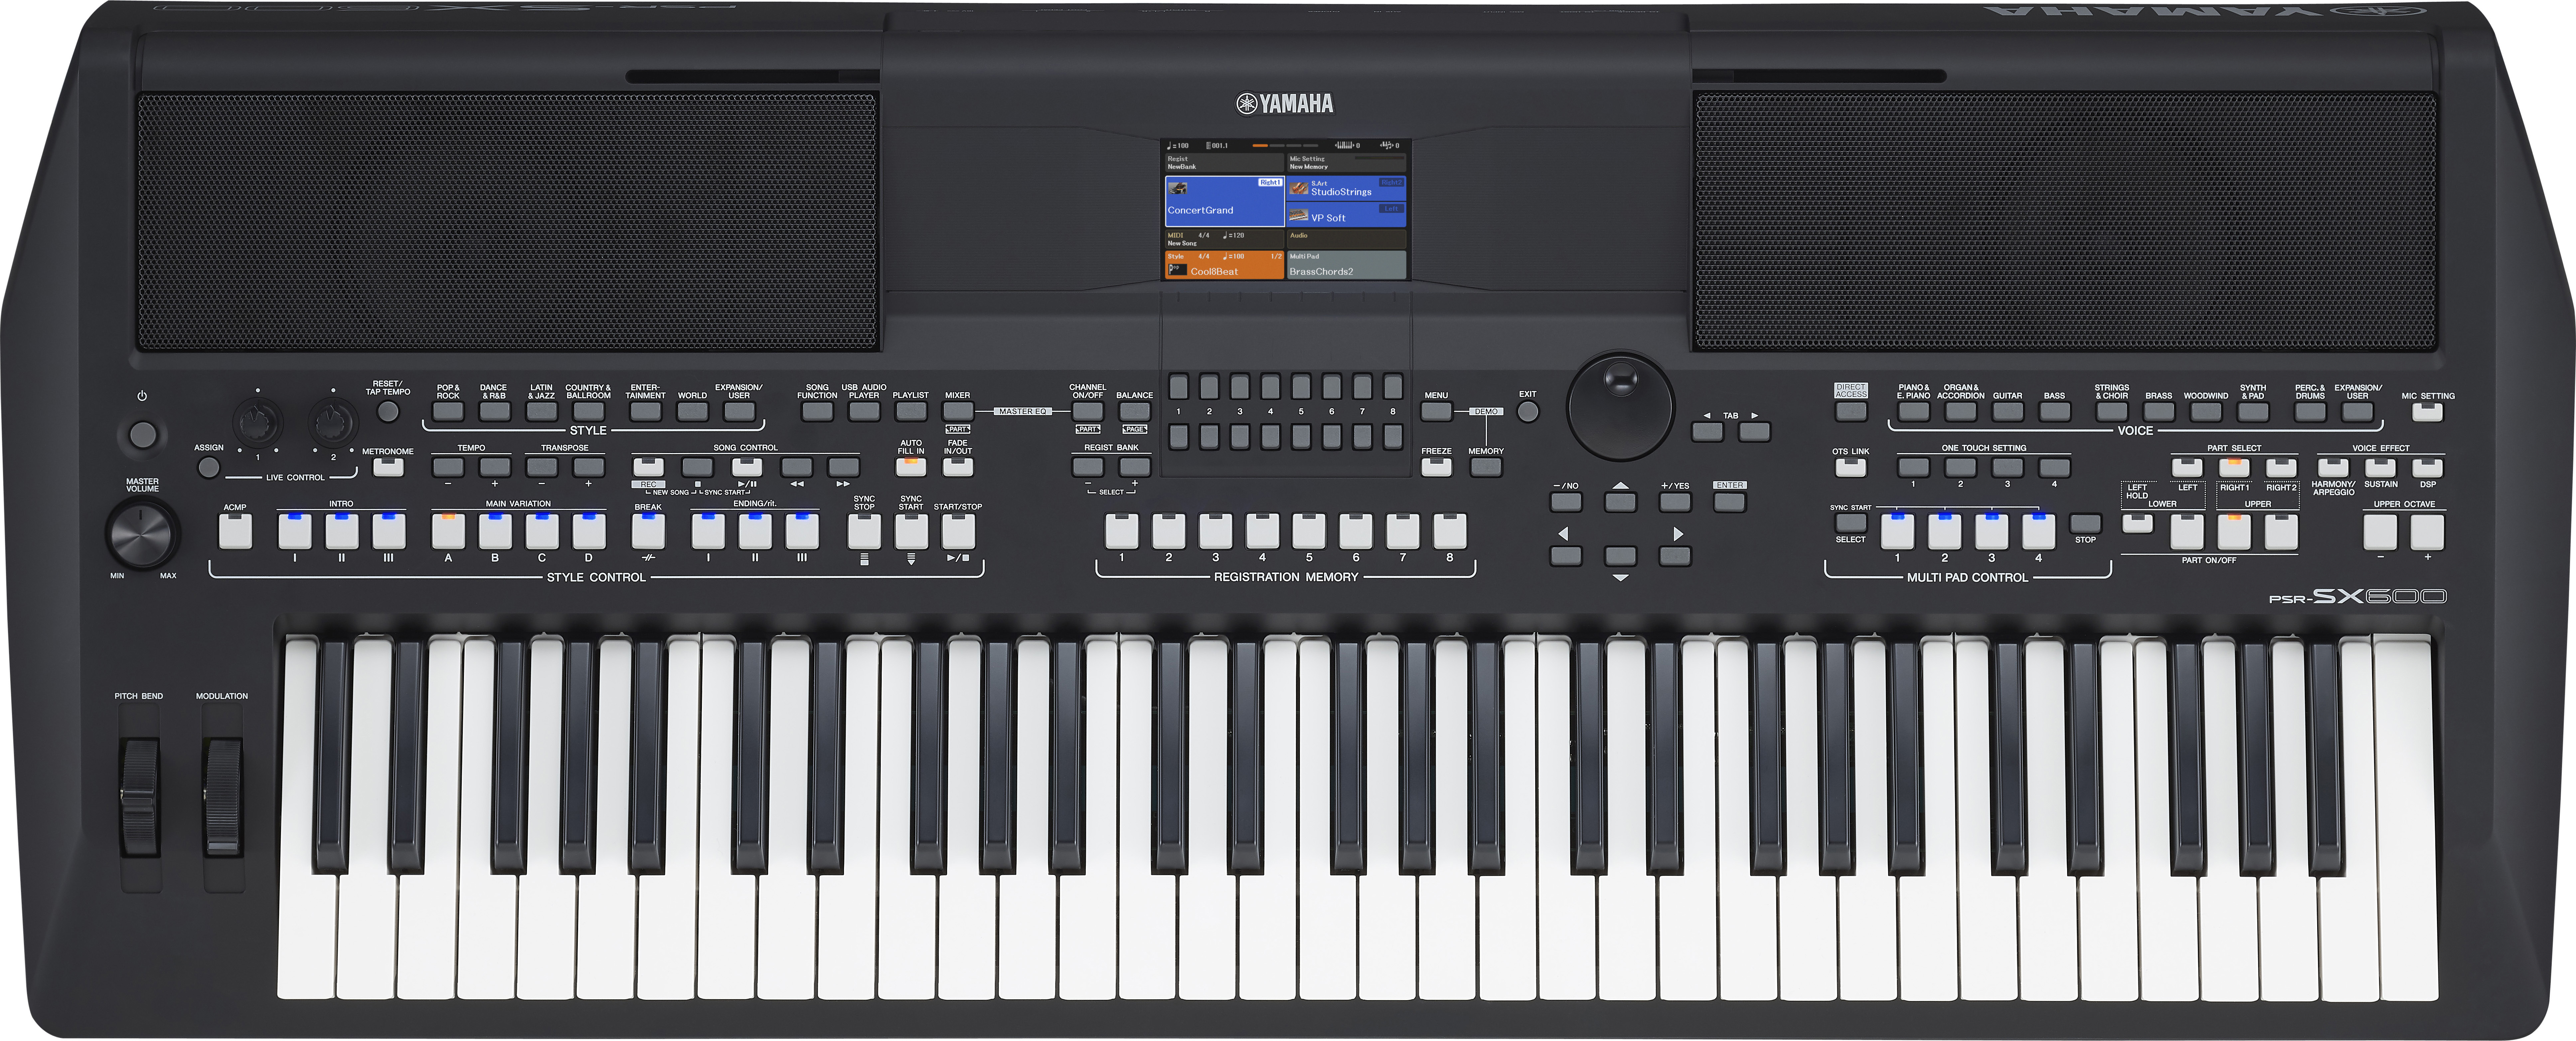 Yamaha Psr-sx600 - Entertainer Keyboard - Main picture